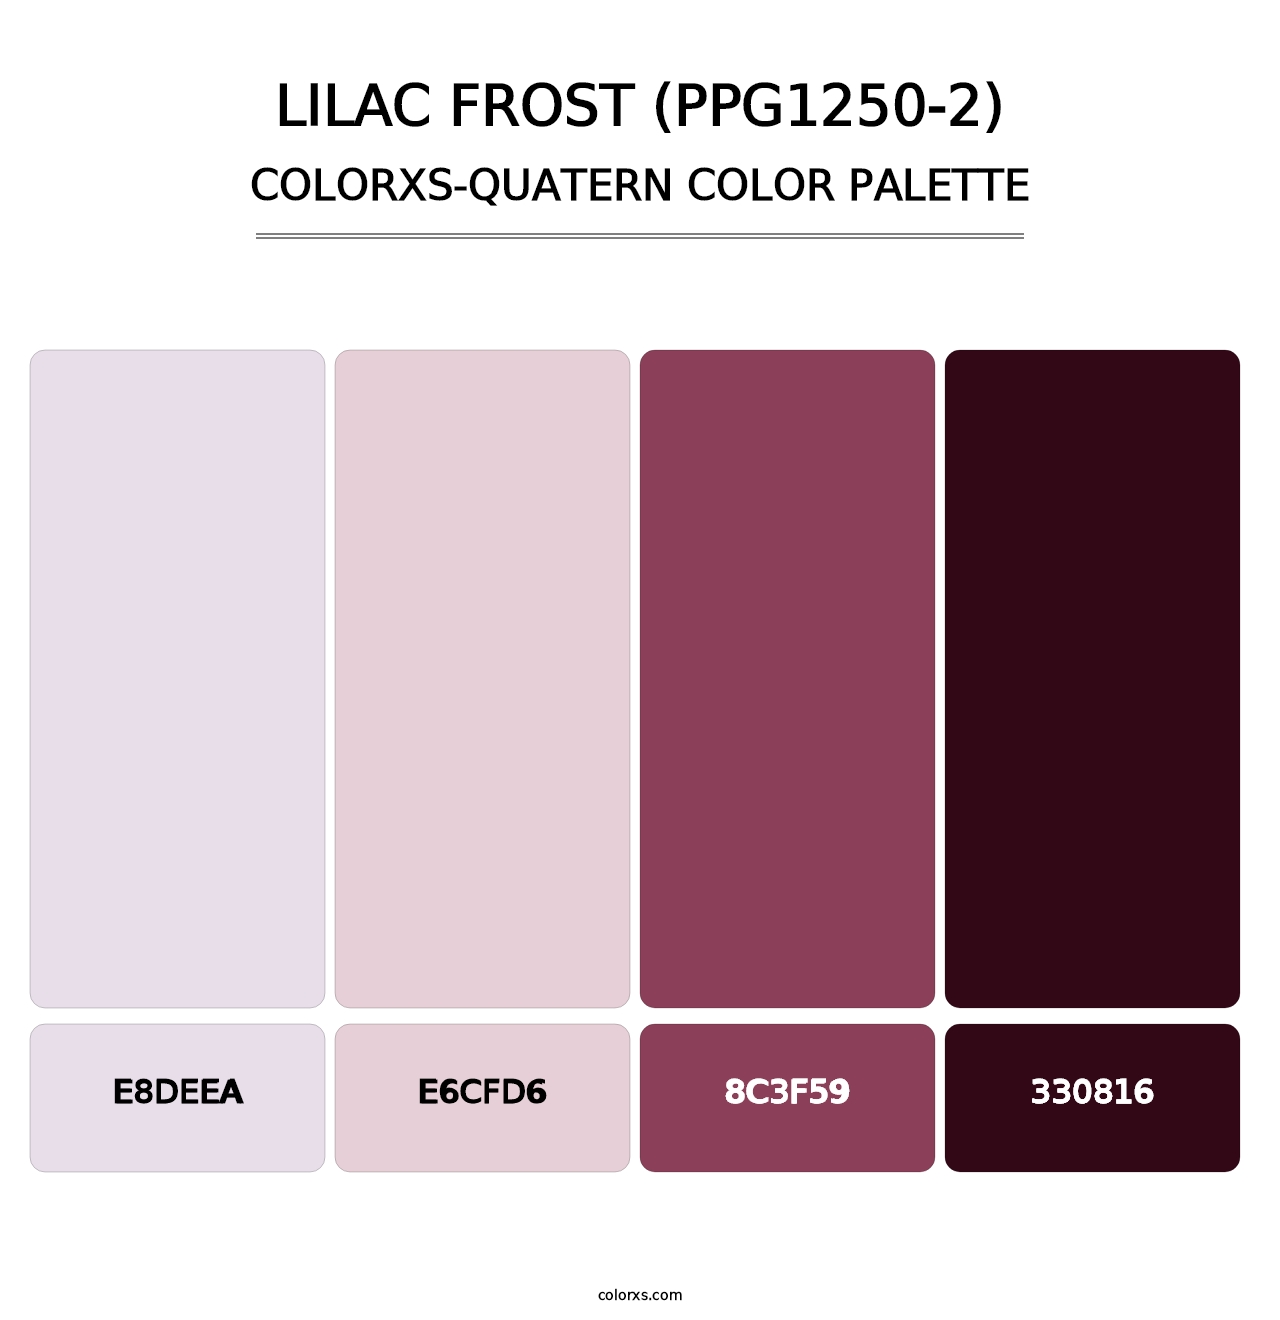 Lilac Frost (PPG1250-2) - Colorxs Quatern Palette